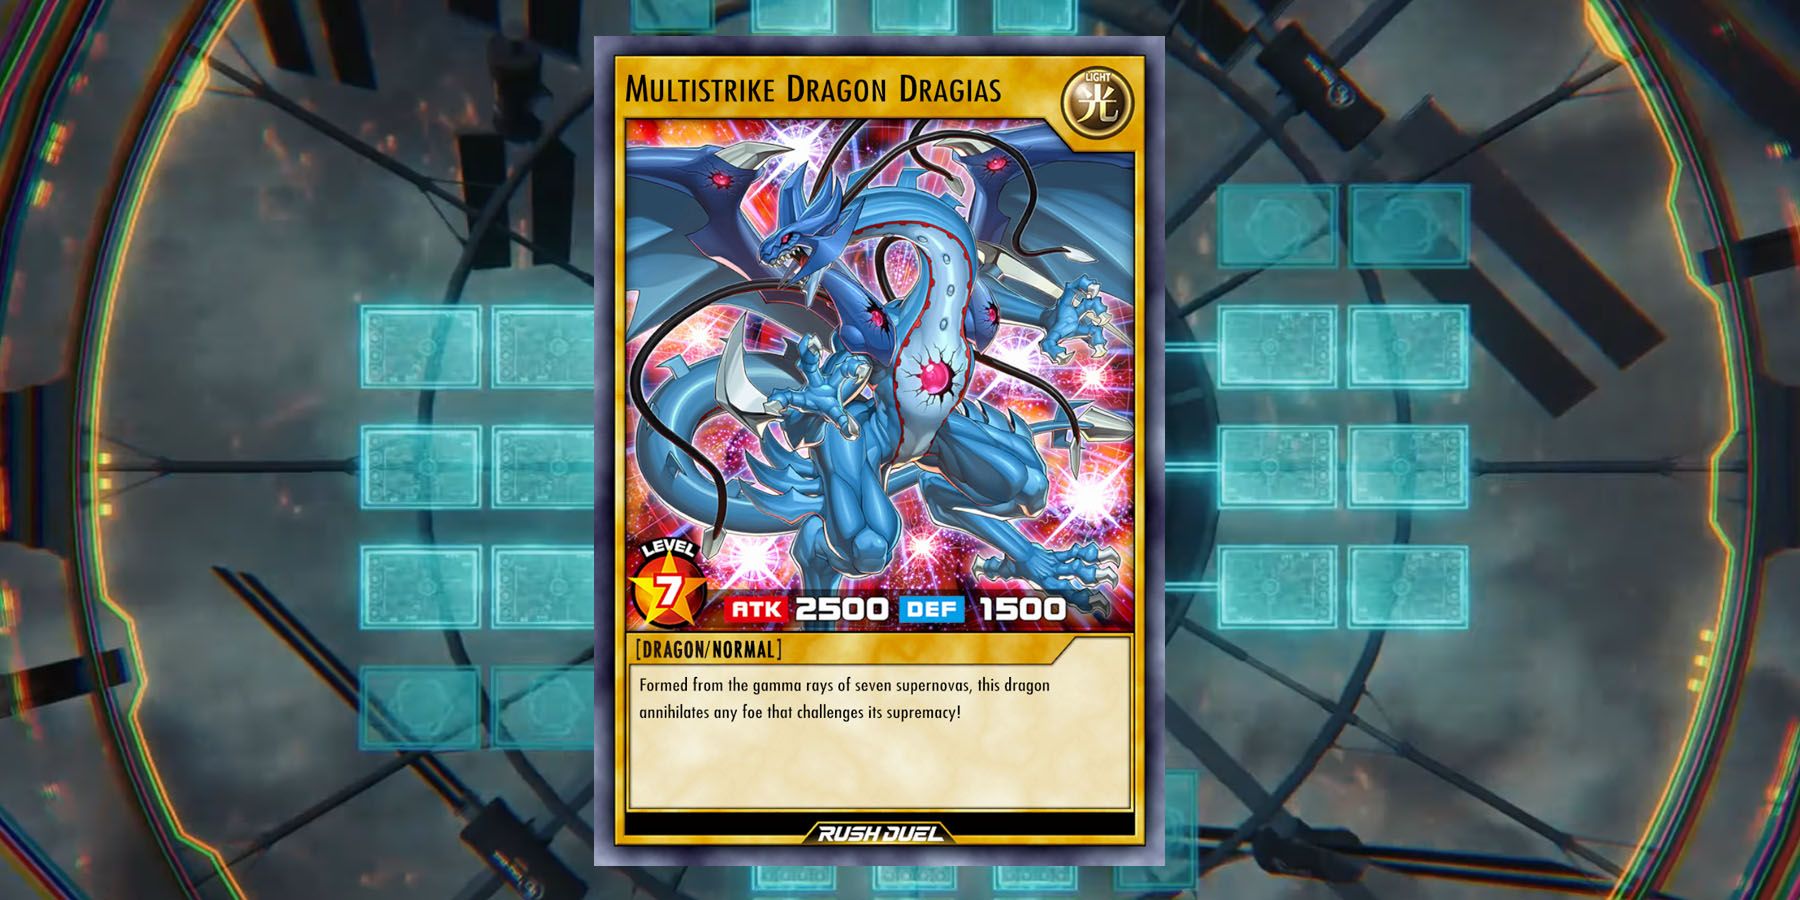 Multistrike Dragon Dragias